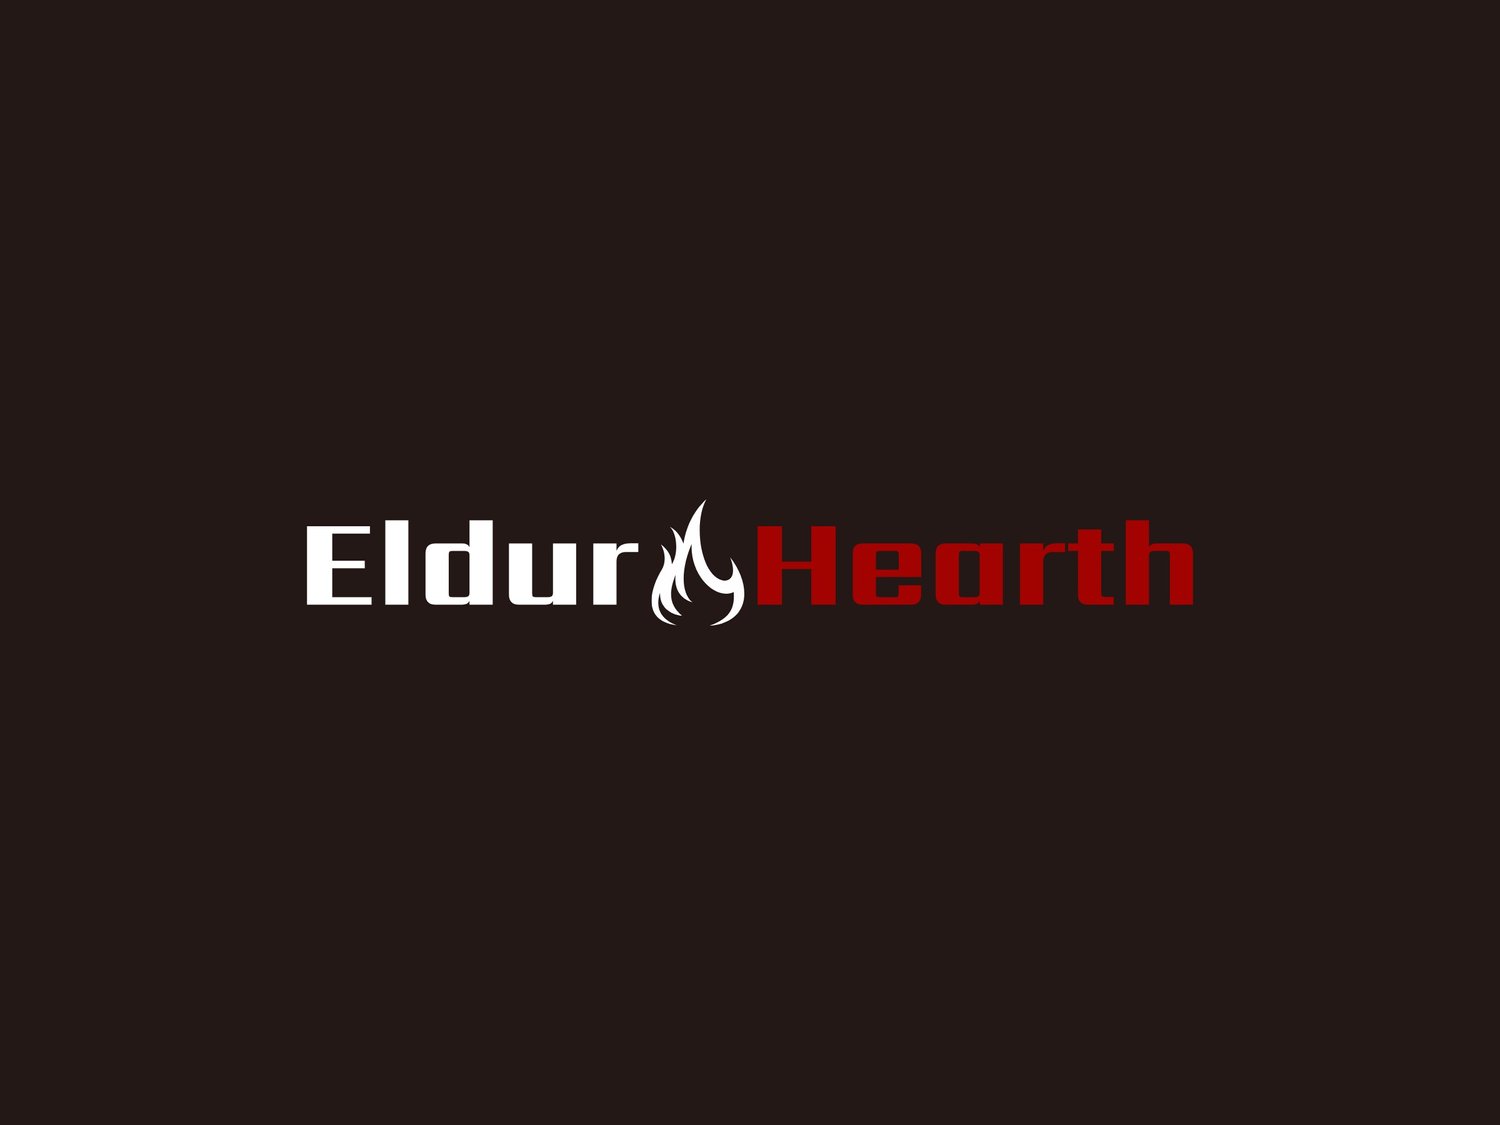 Eldur Hearth Products